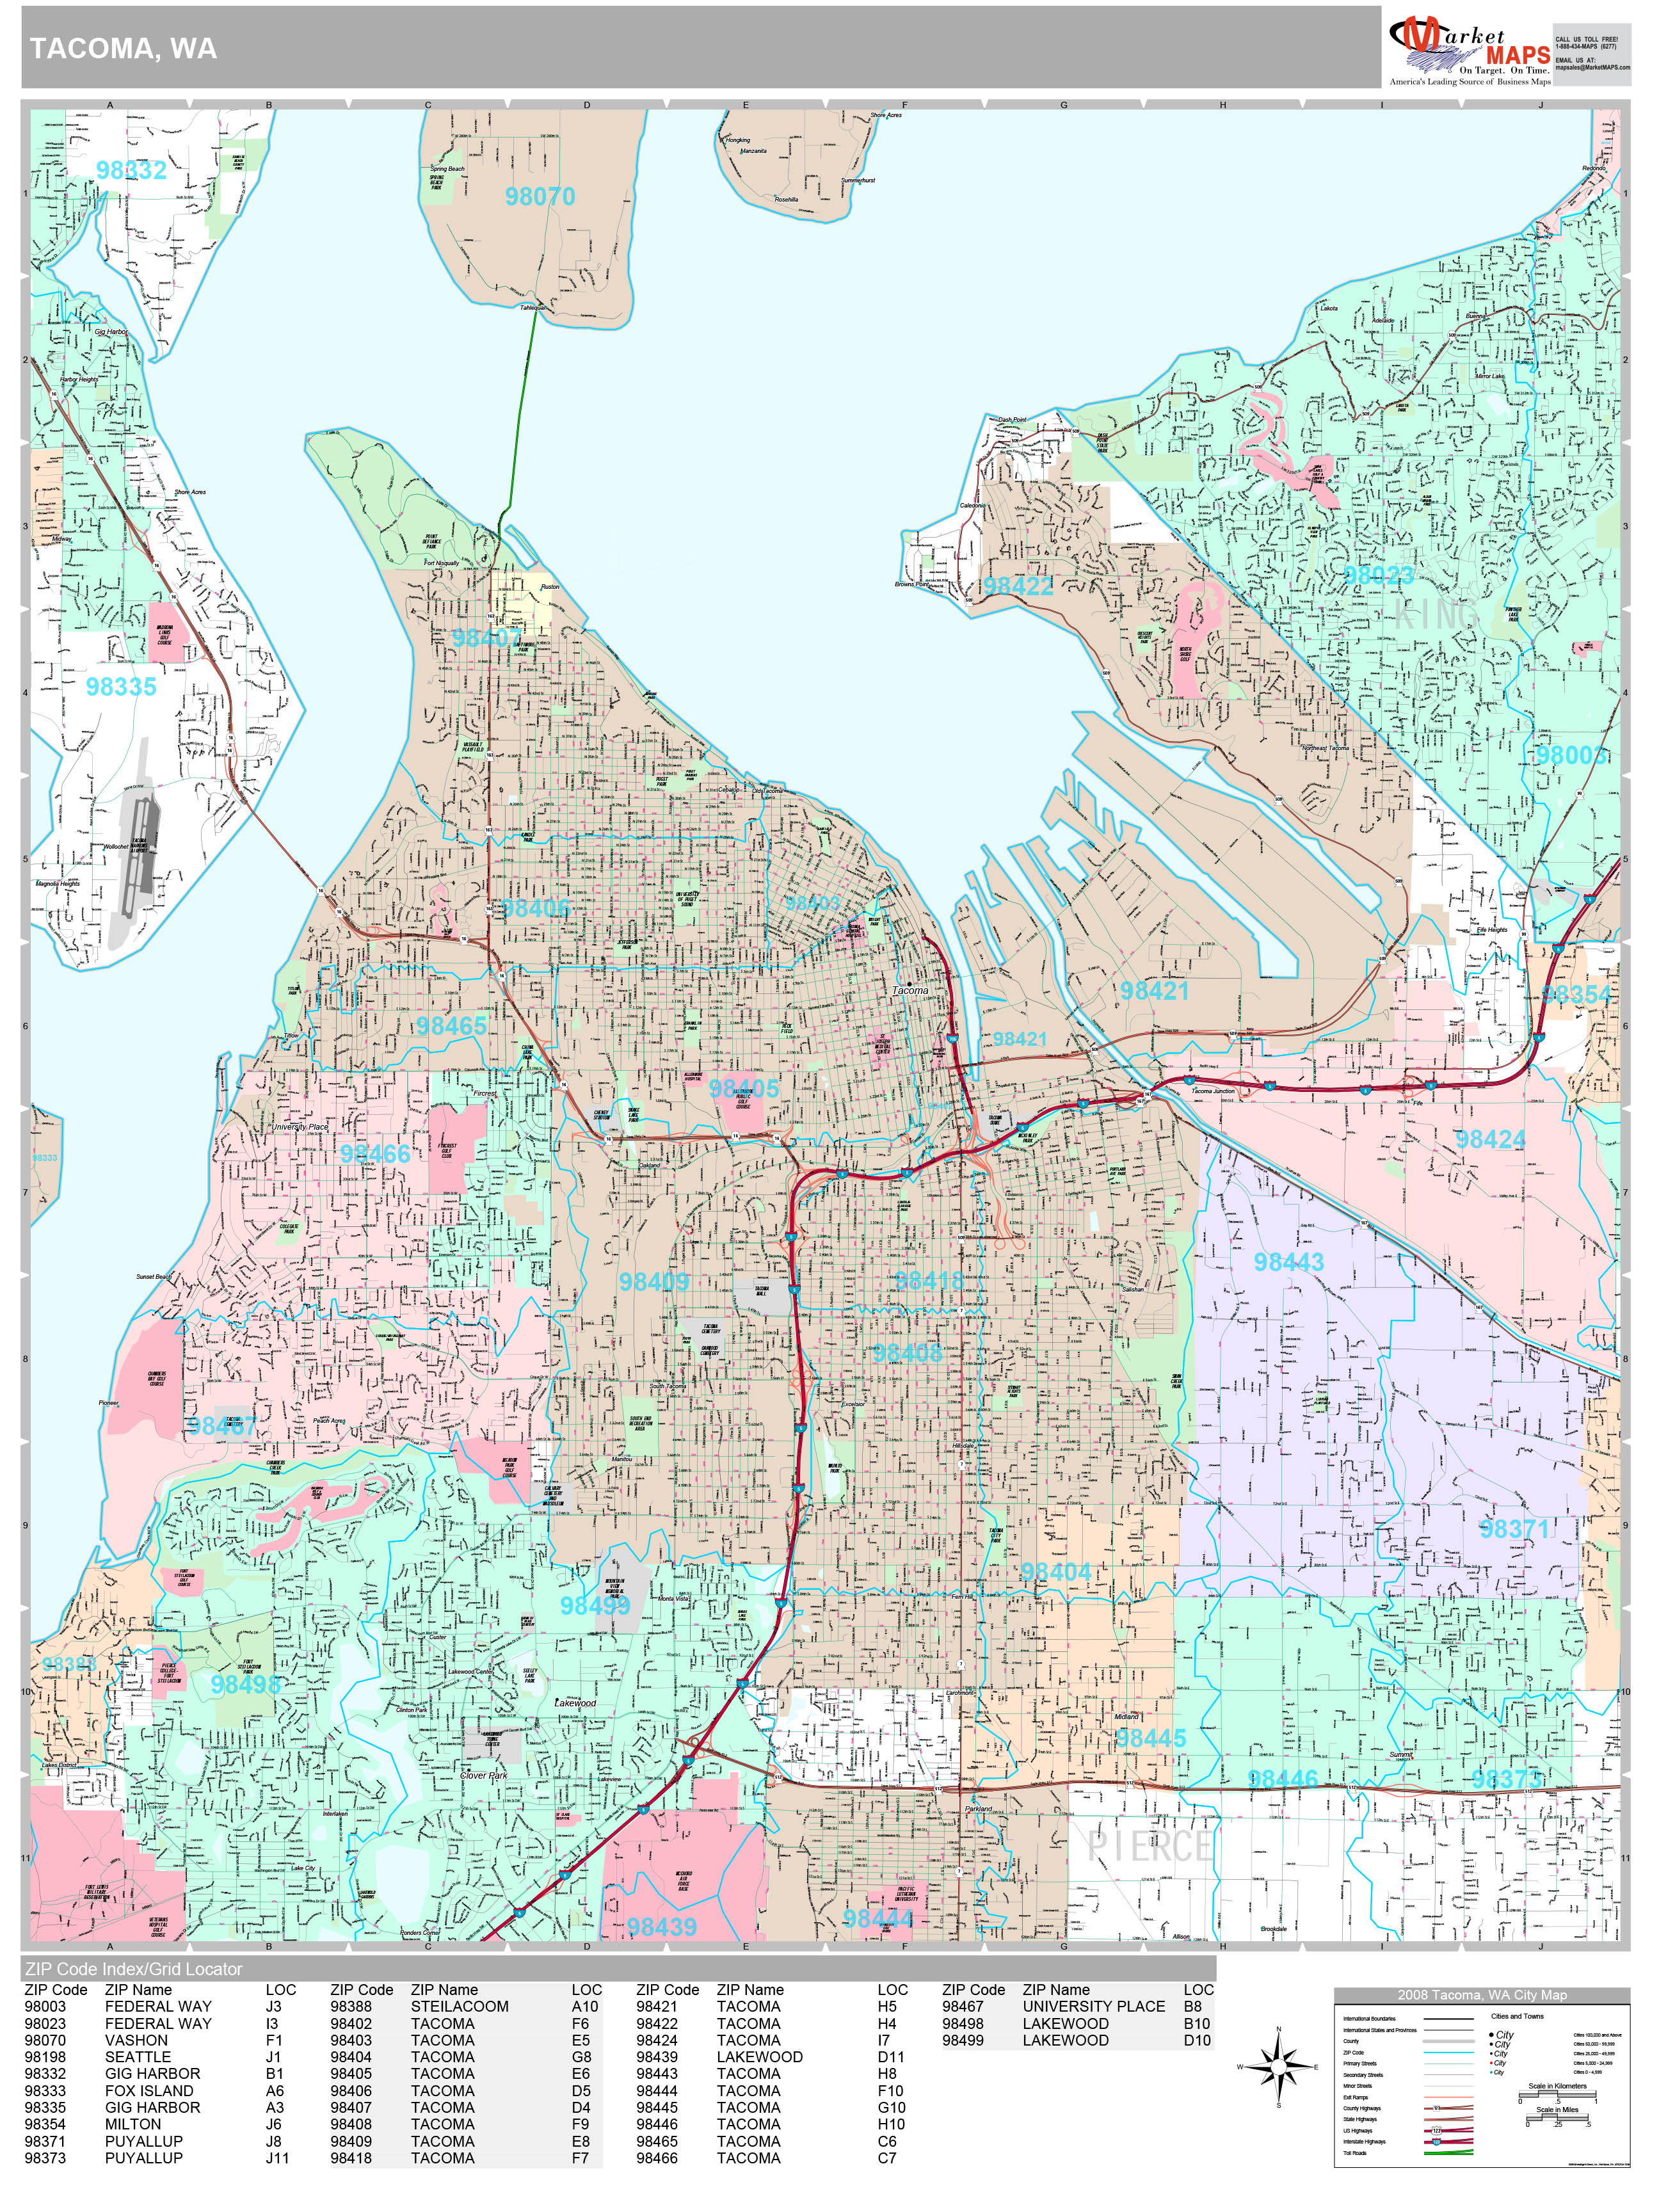 city of tacoma traffic plan